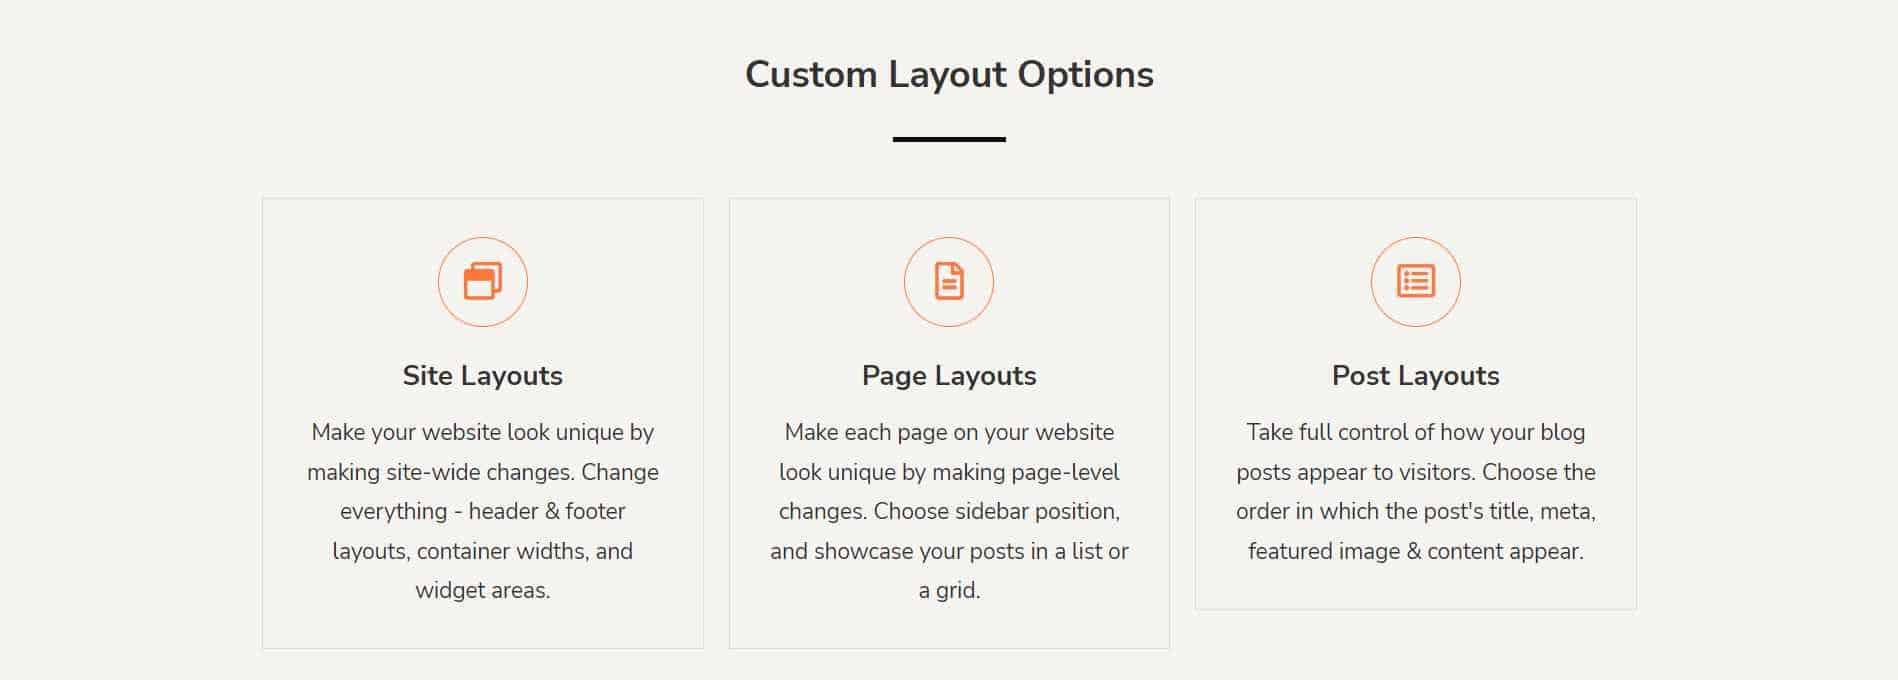 Custom Layout Options